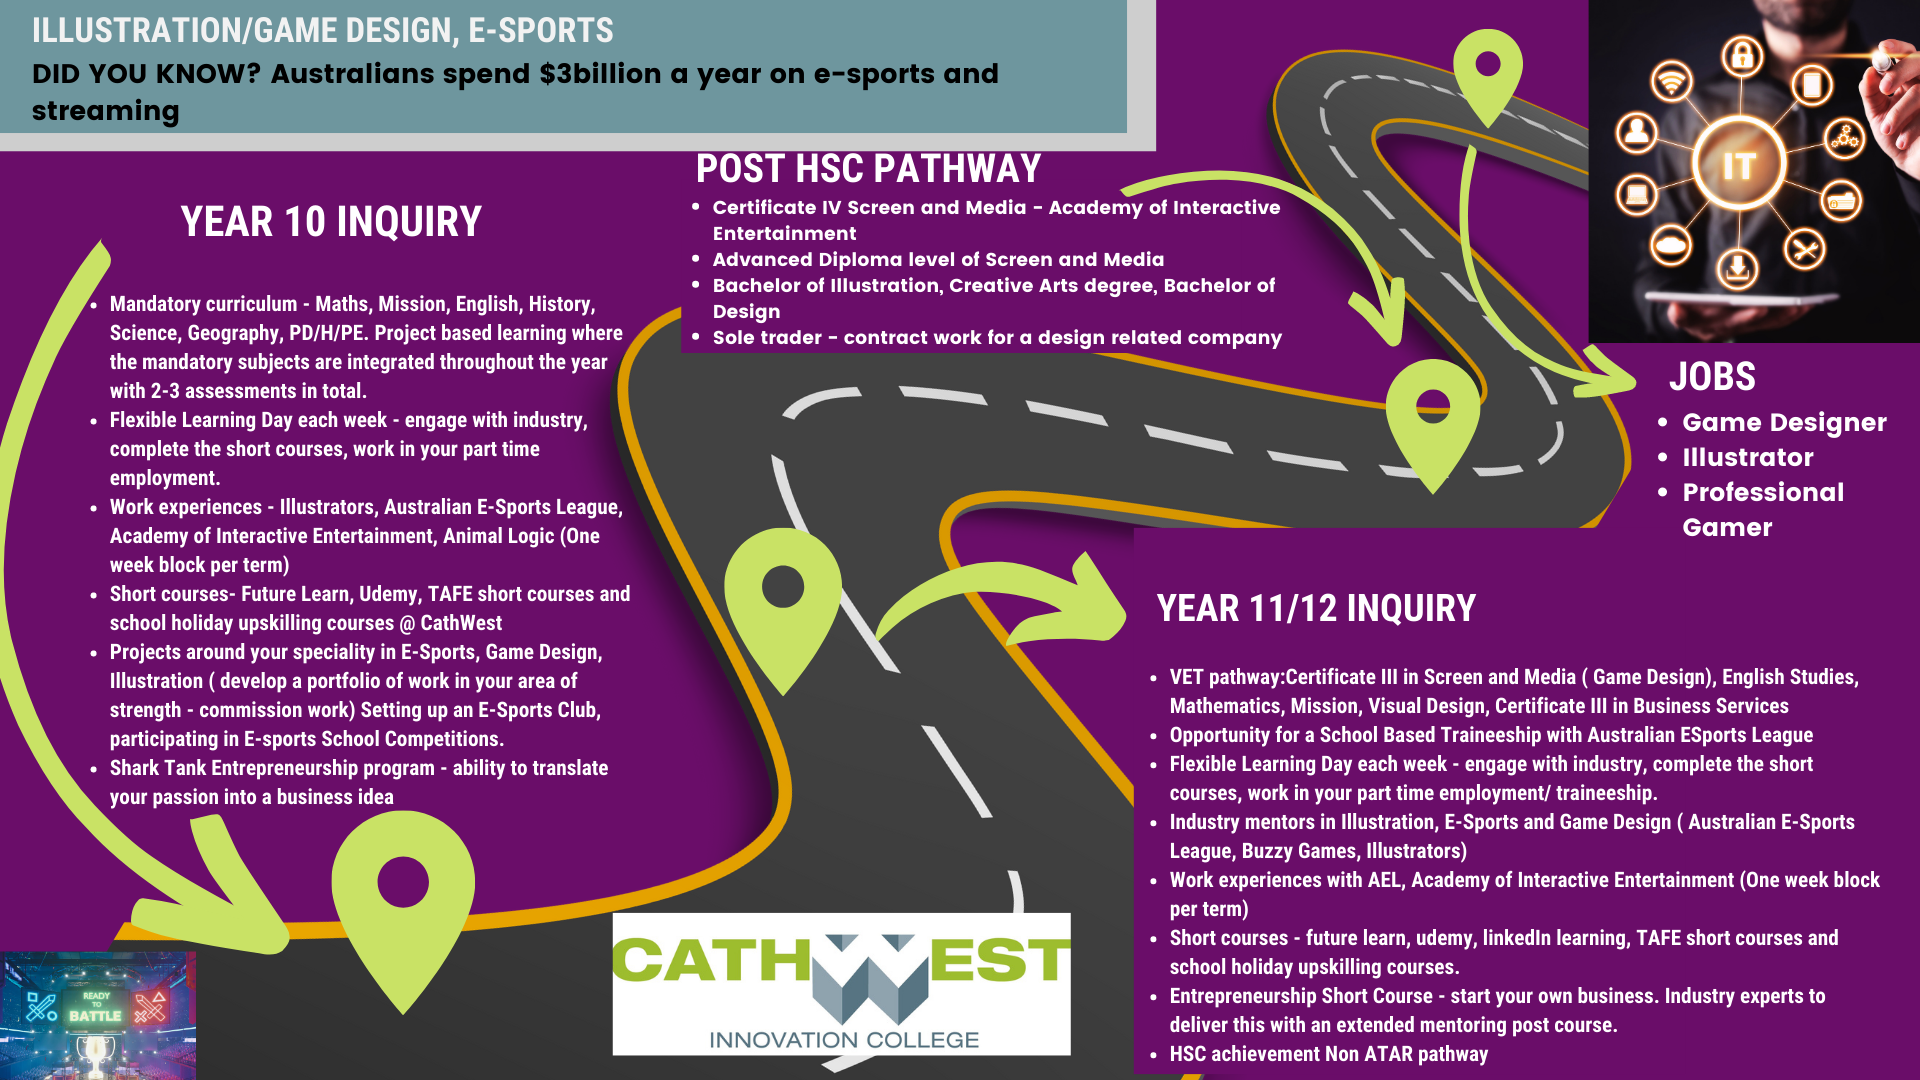 Illustration Career Pathways at CathWest Innovation College